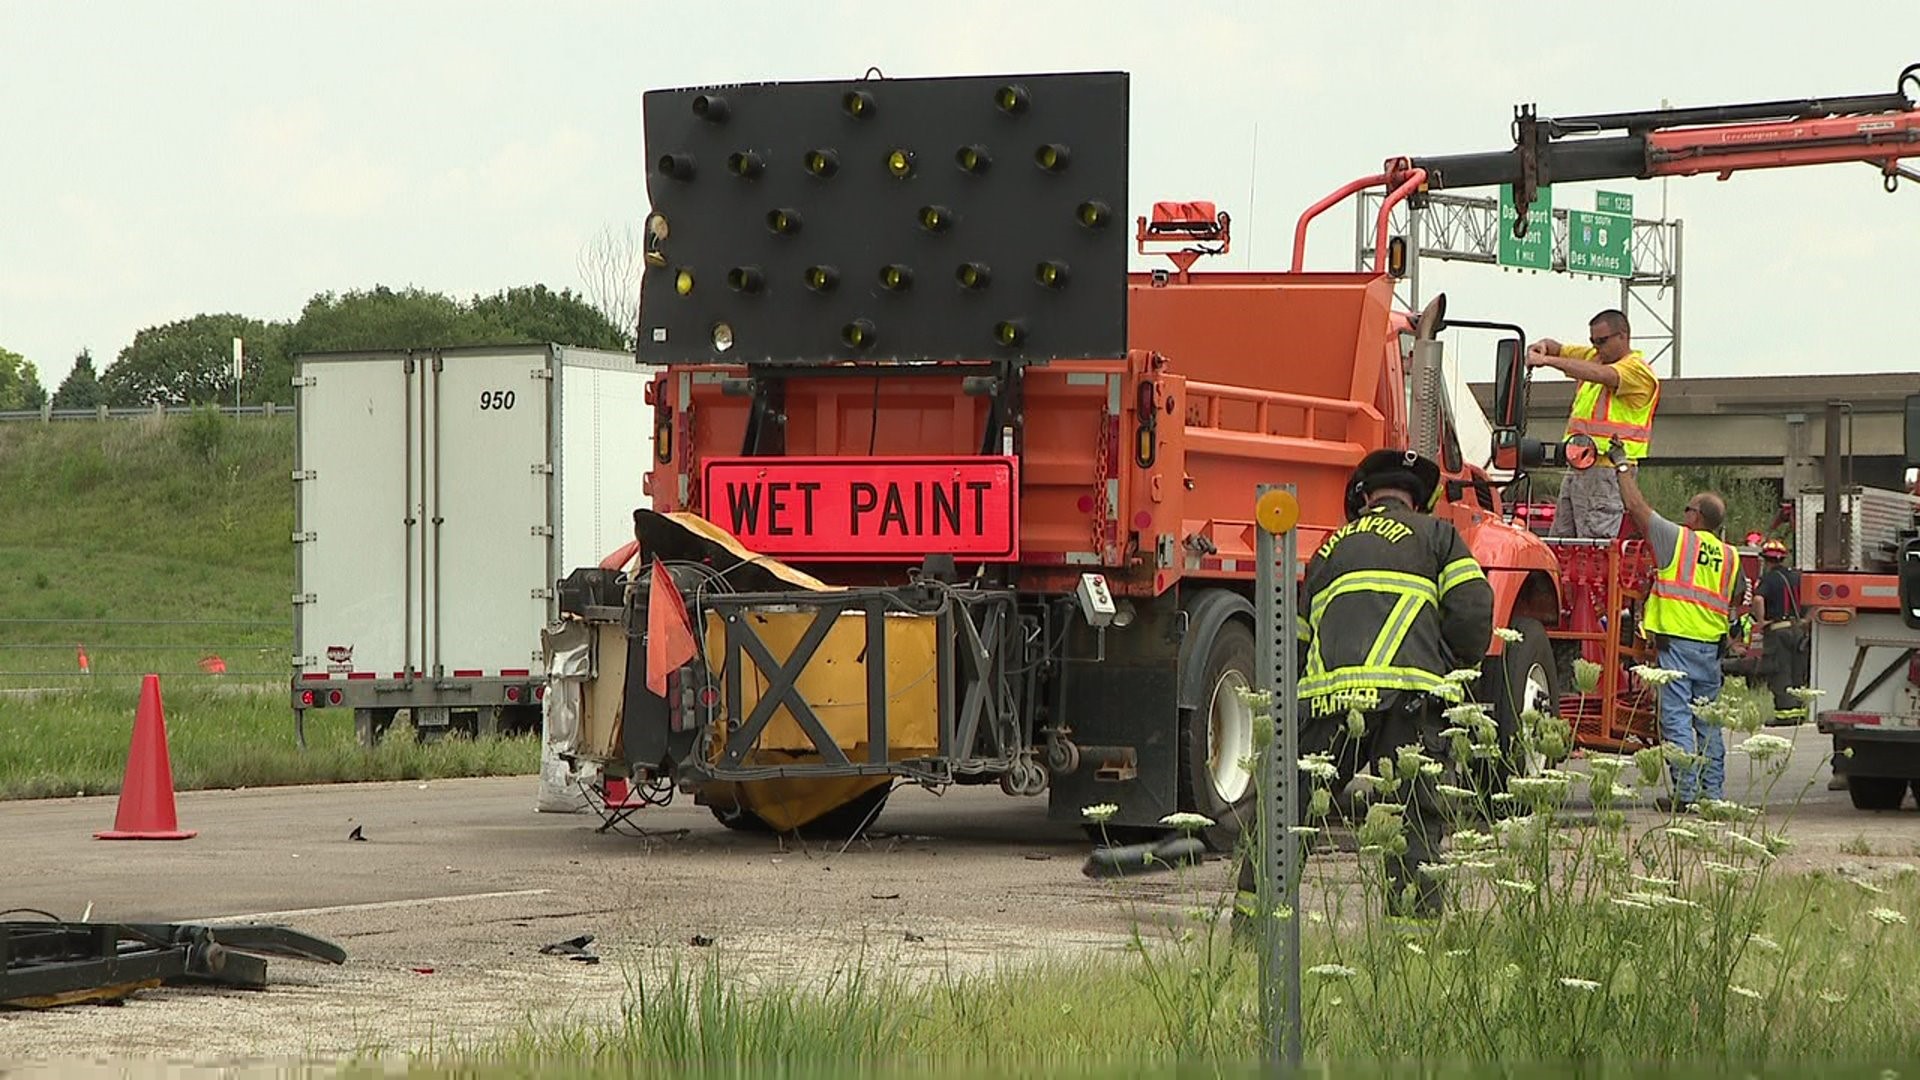 Semi crashes into IDOT paint truck